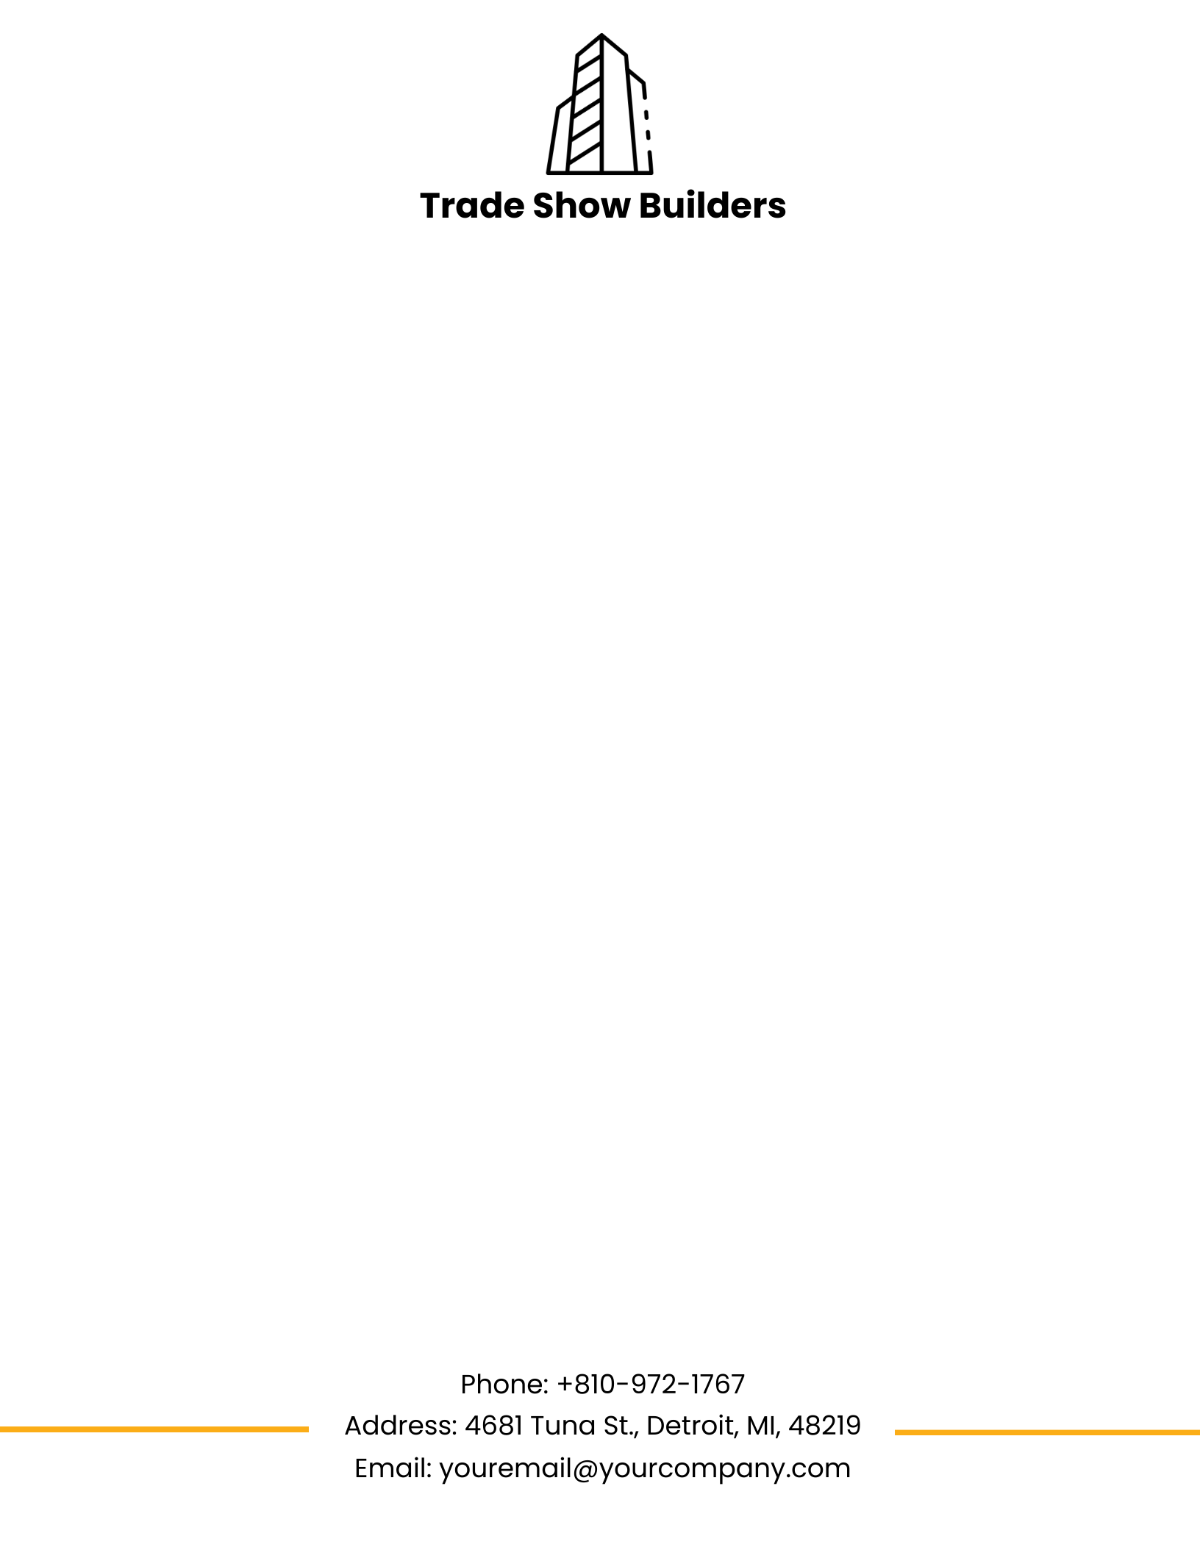 Builder's Trade Show Letterhead